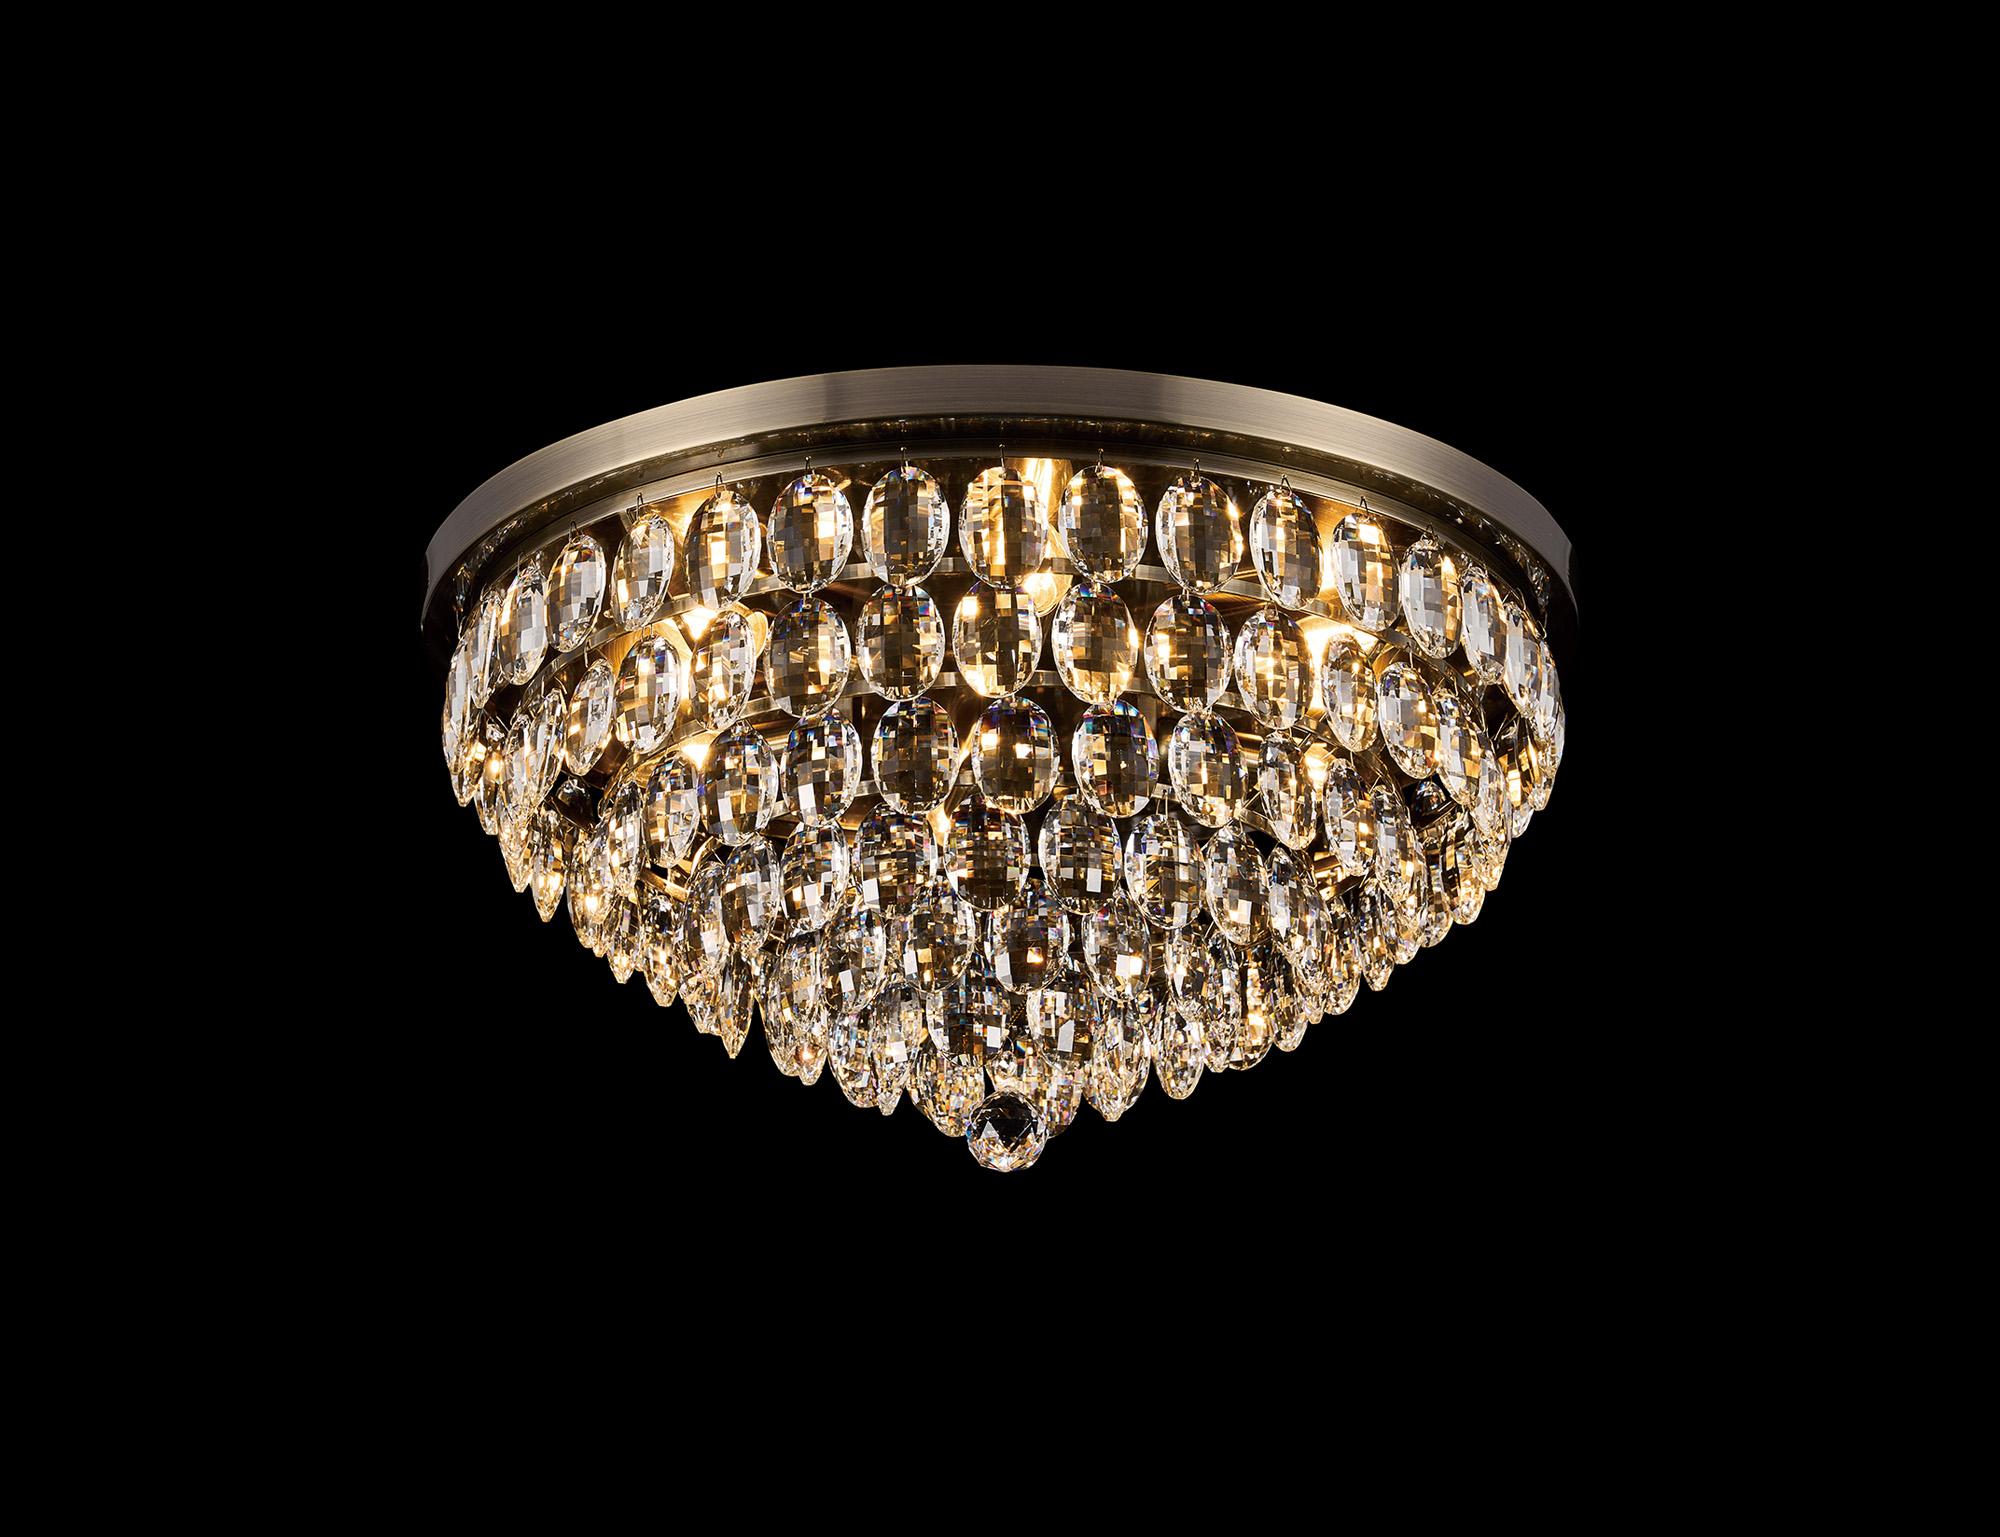 Coniston Antique Brass Crystal Ceiling Lights Diyas Flush Crystal Fittings